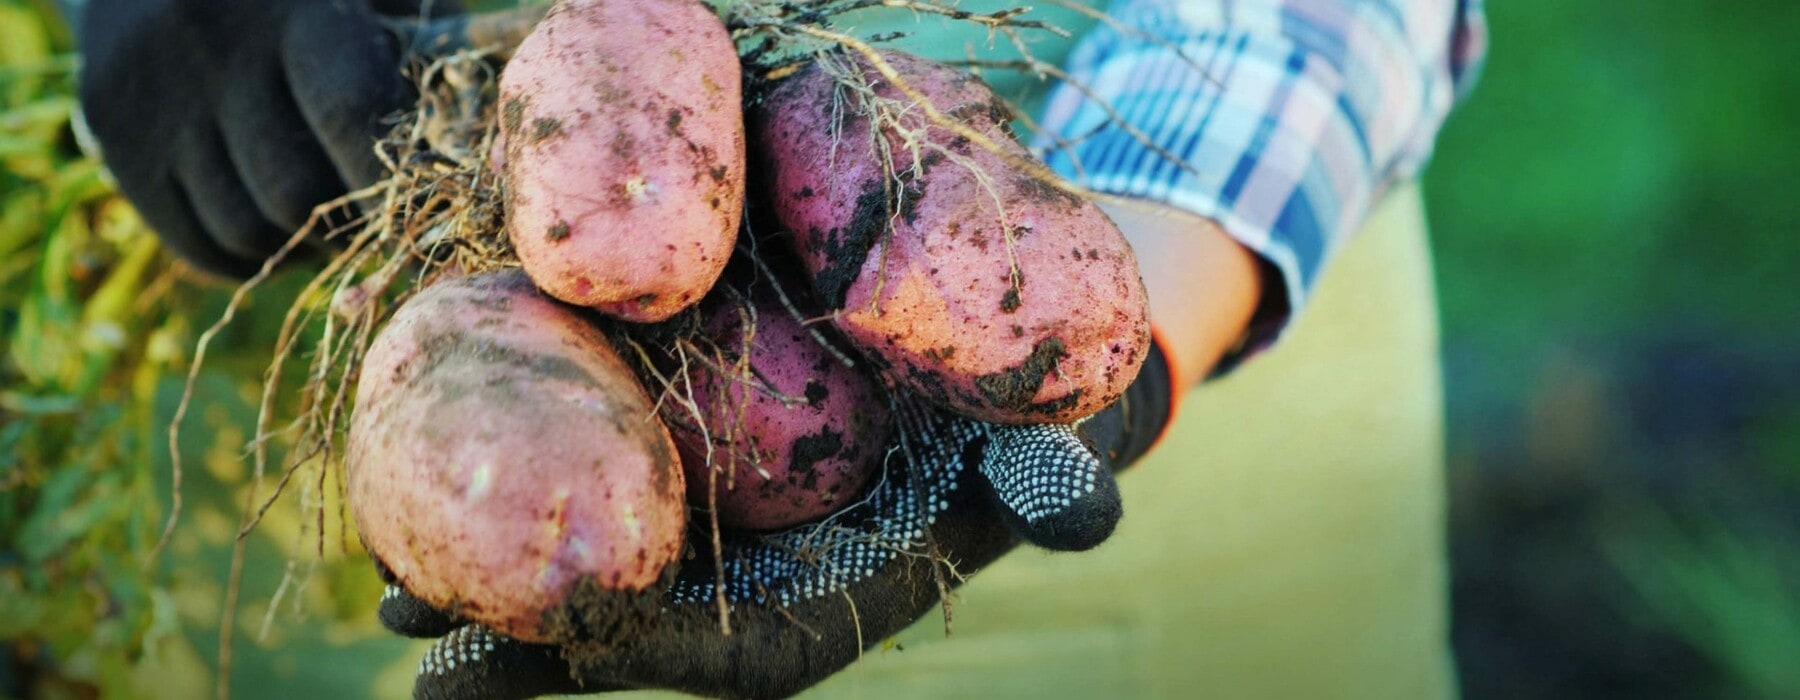 Gloved hands holding several dug up potatoes